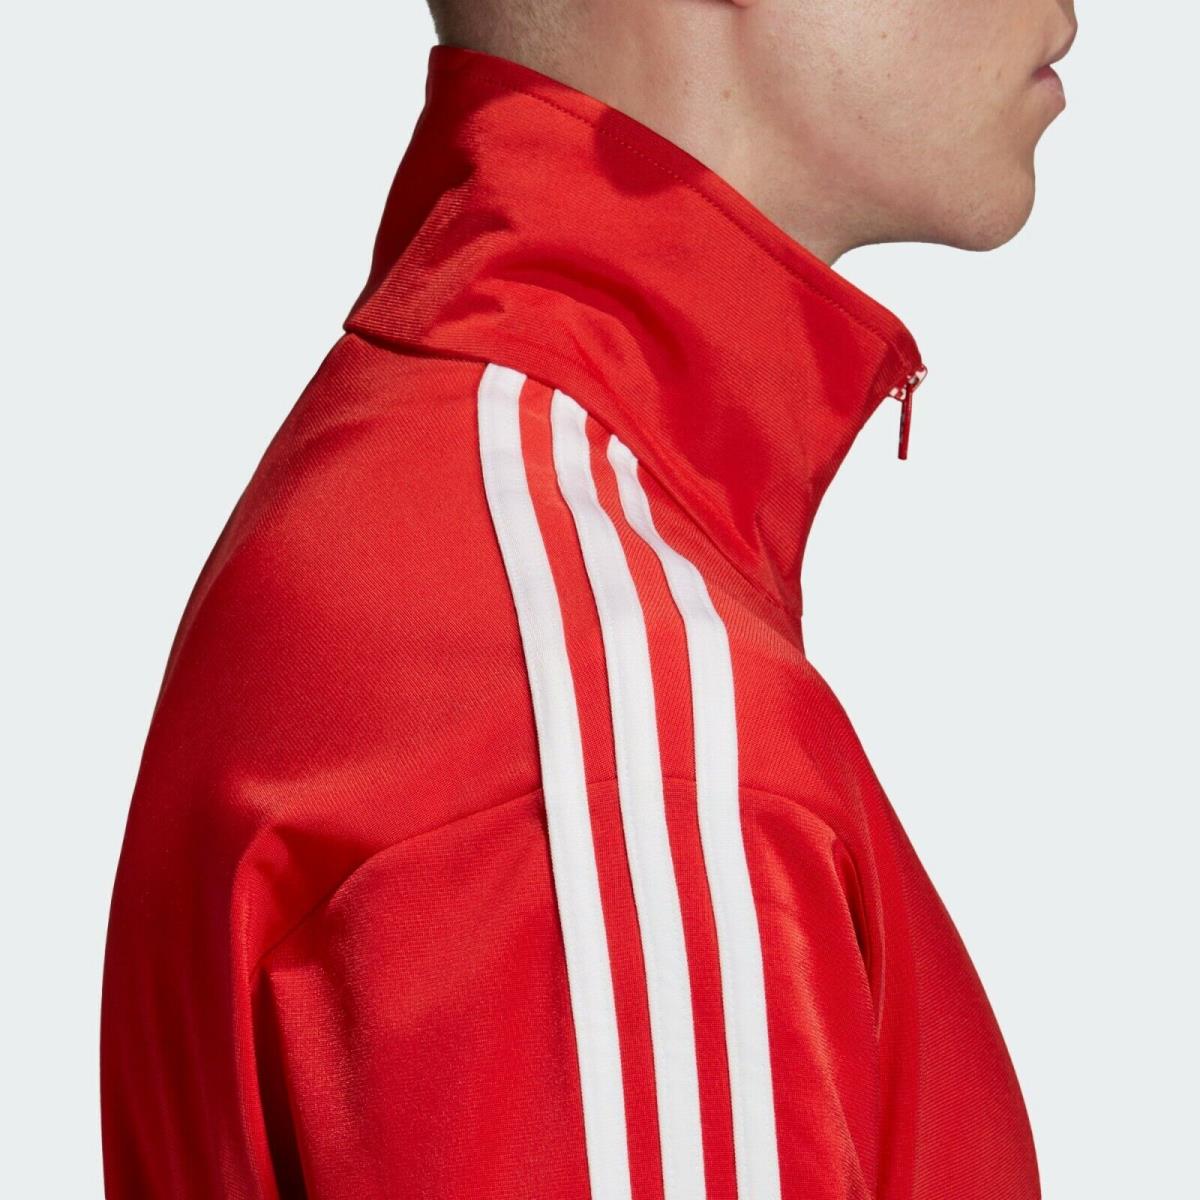 moderately news Objection Adidas Men`s Originals Firebird Track Jacket | 692740745411 - Adidas  clothing Firebird - Lush Red | SporTipTop